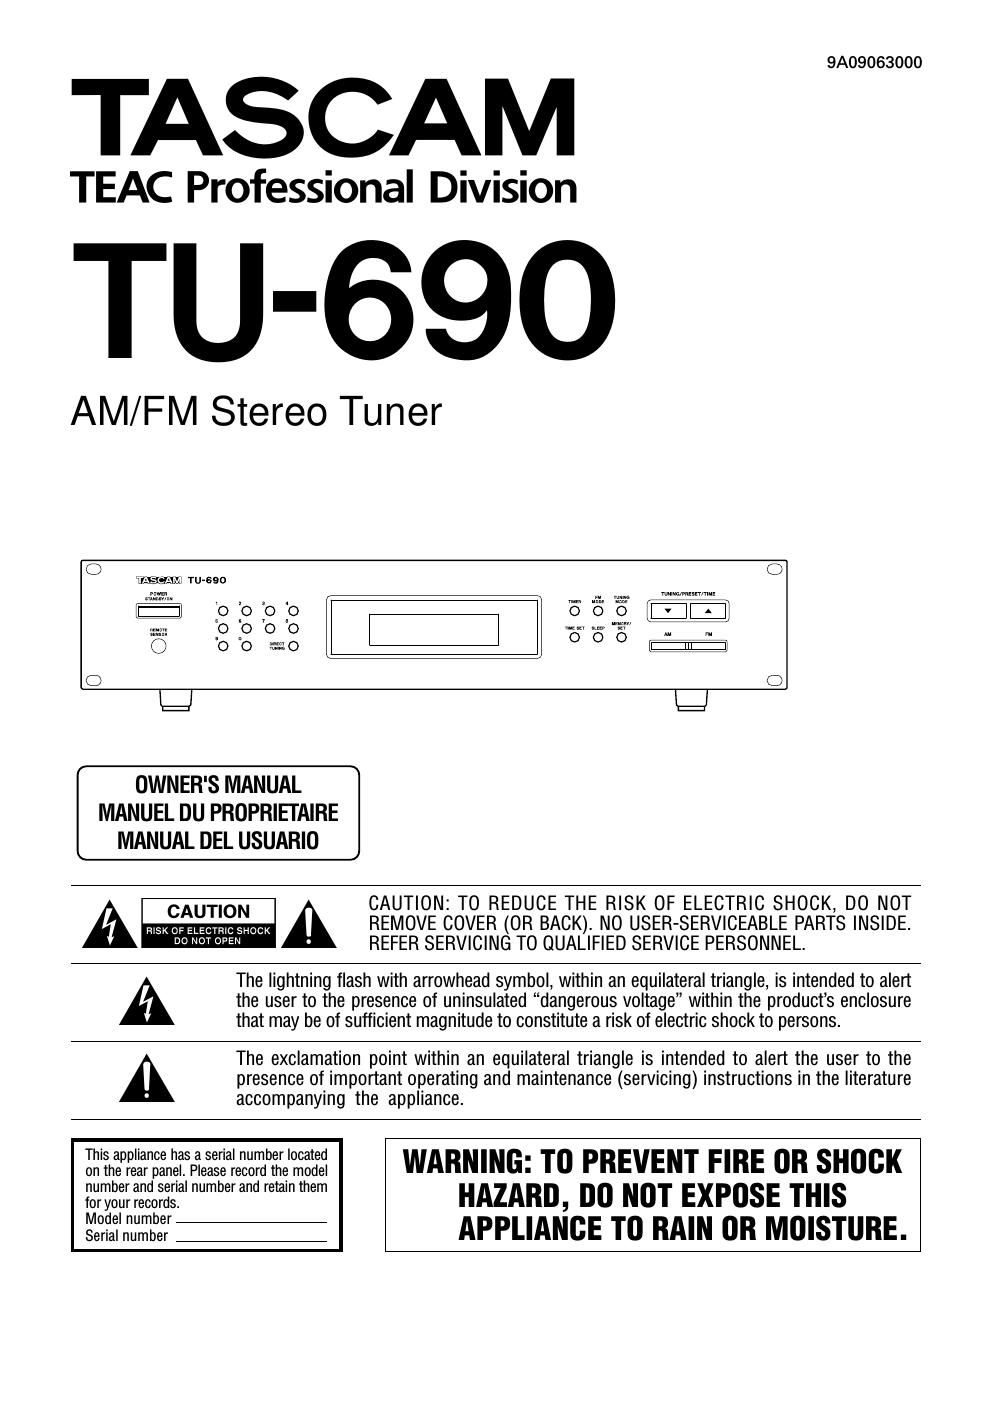 Tascam TU 690 Owners Manual